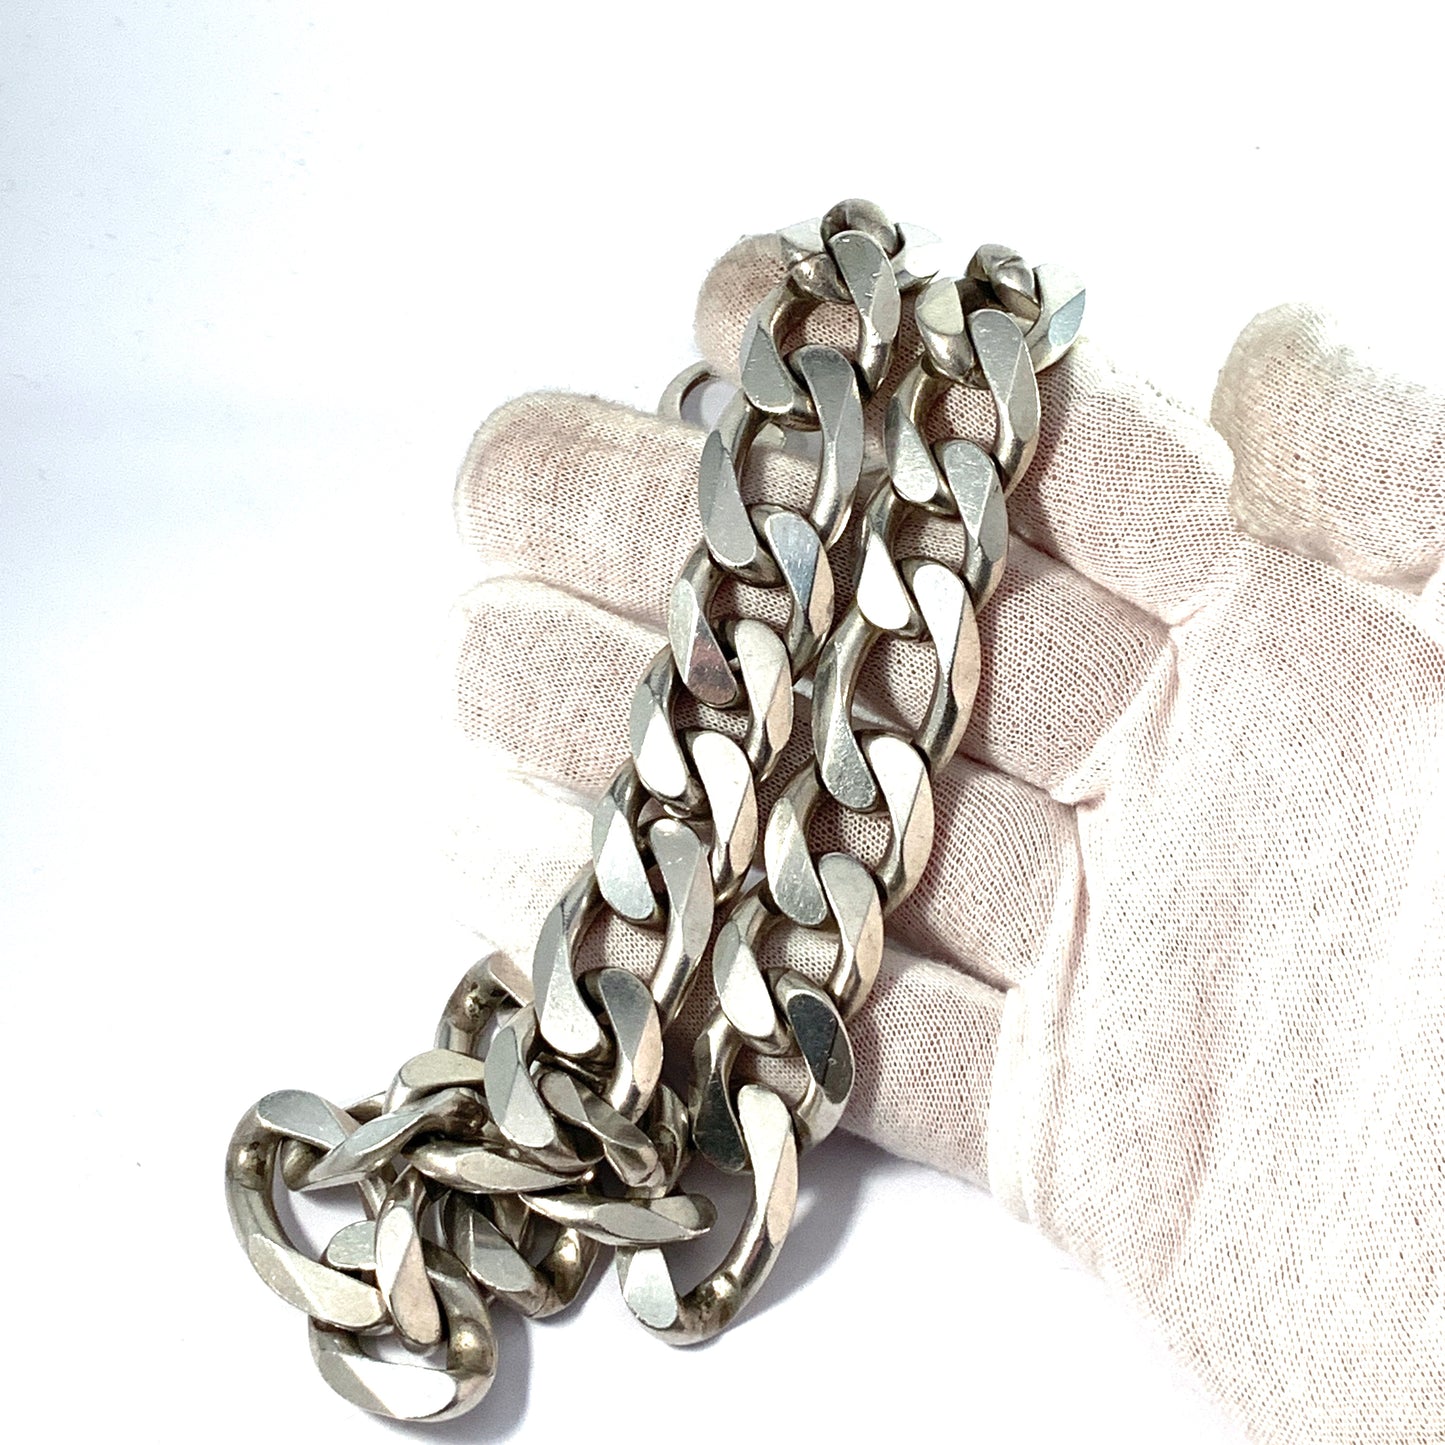 Vintage Massive 11oz / 0.3kg Sterling Silver Chain Necklace.